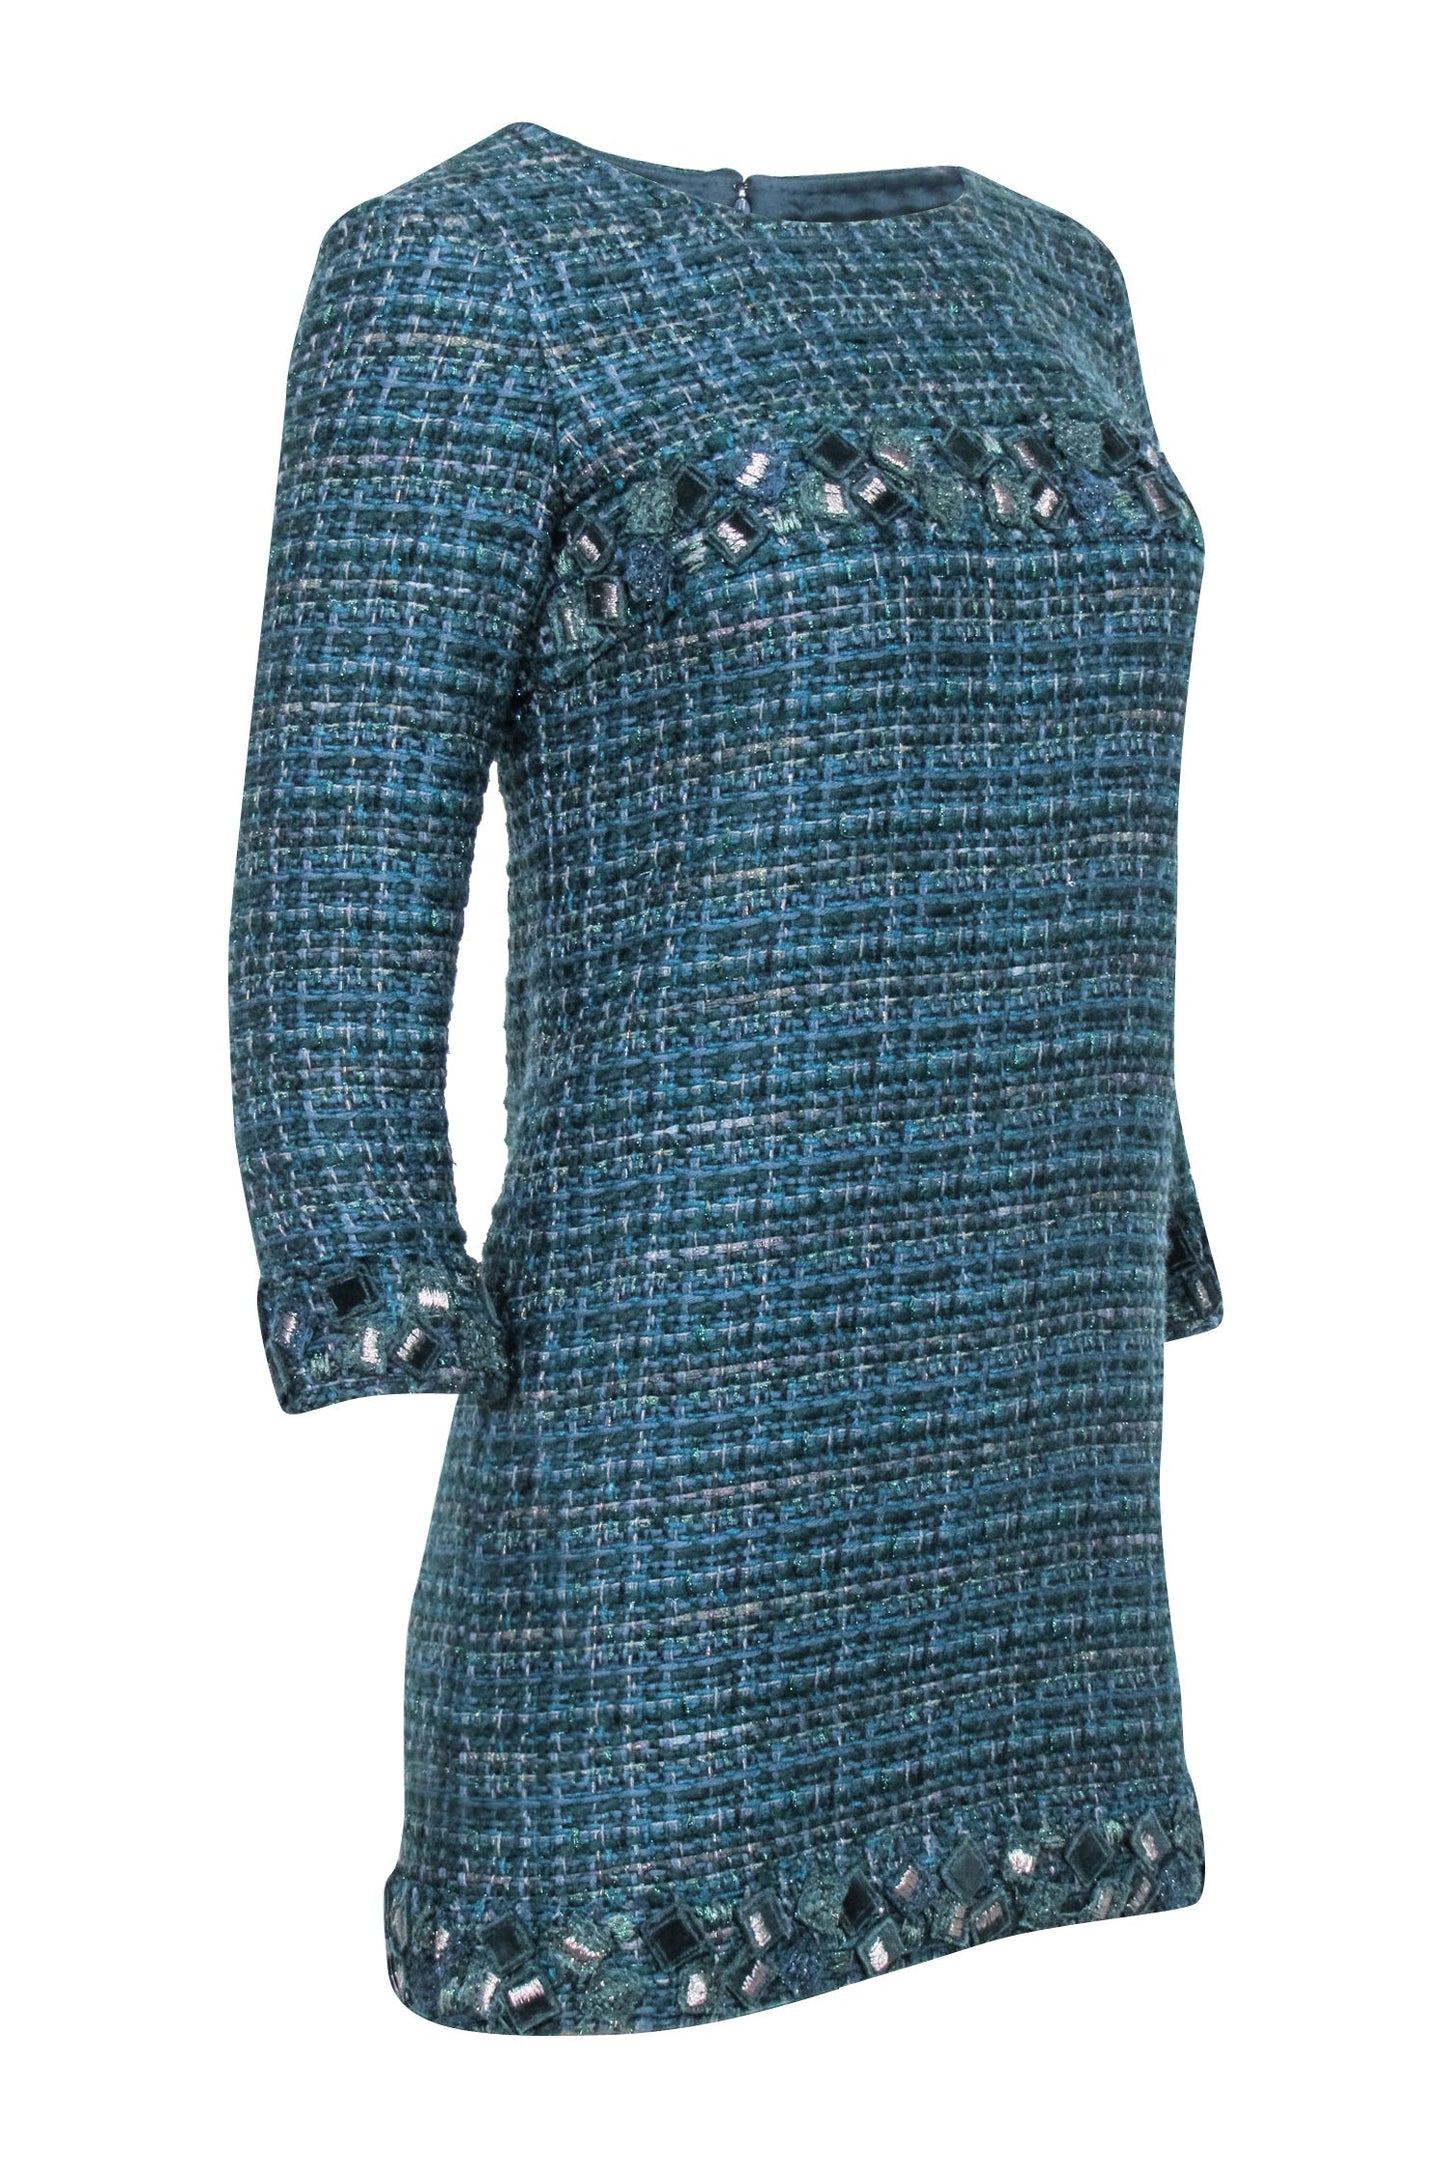 Chanel - Green Tweed Long Sleeve Shift Dress Sz 4